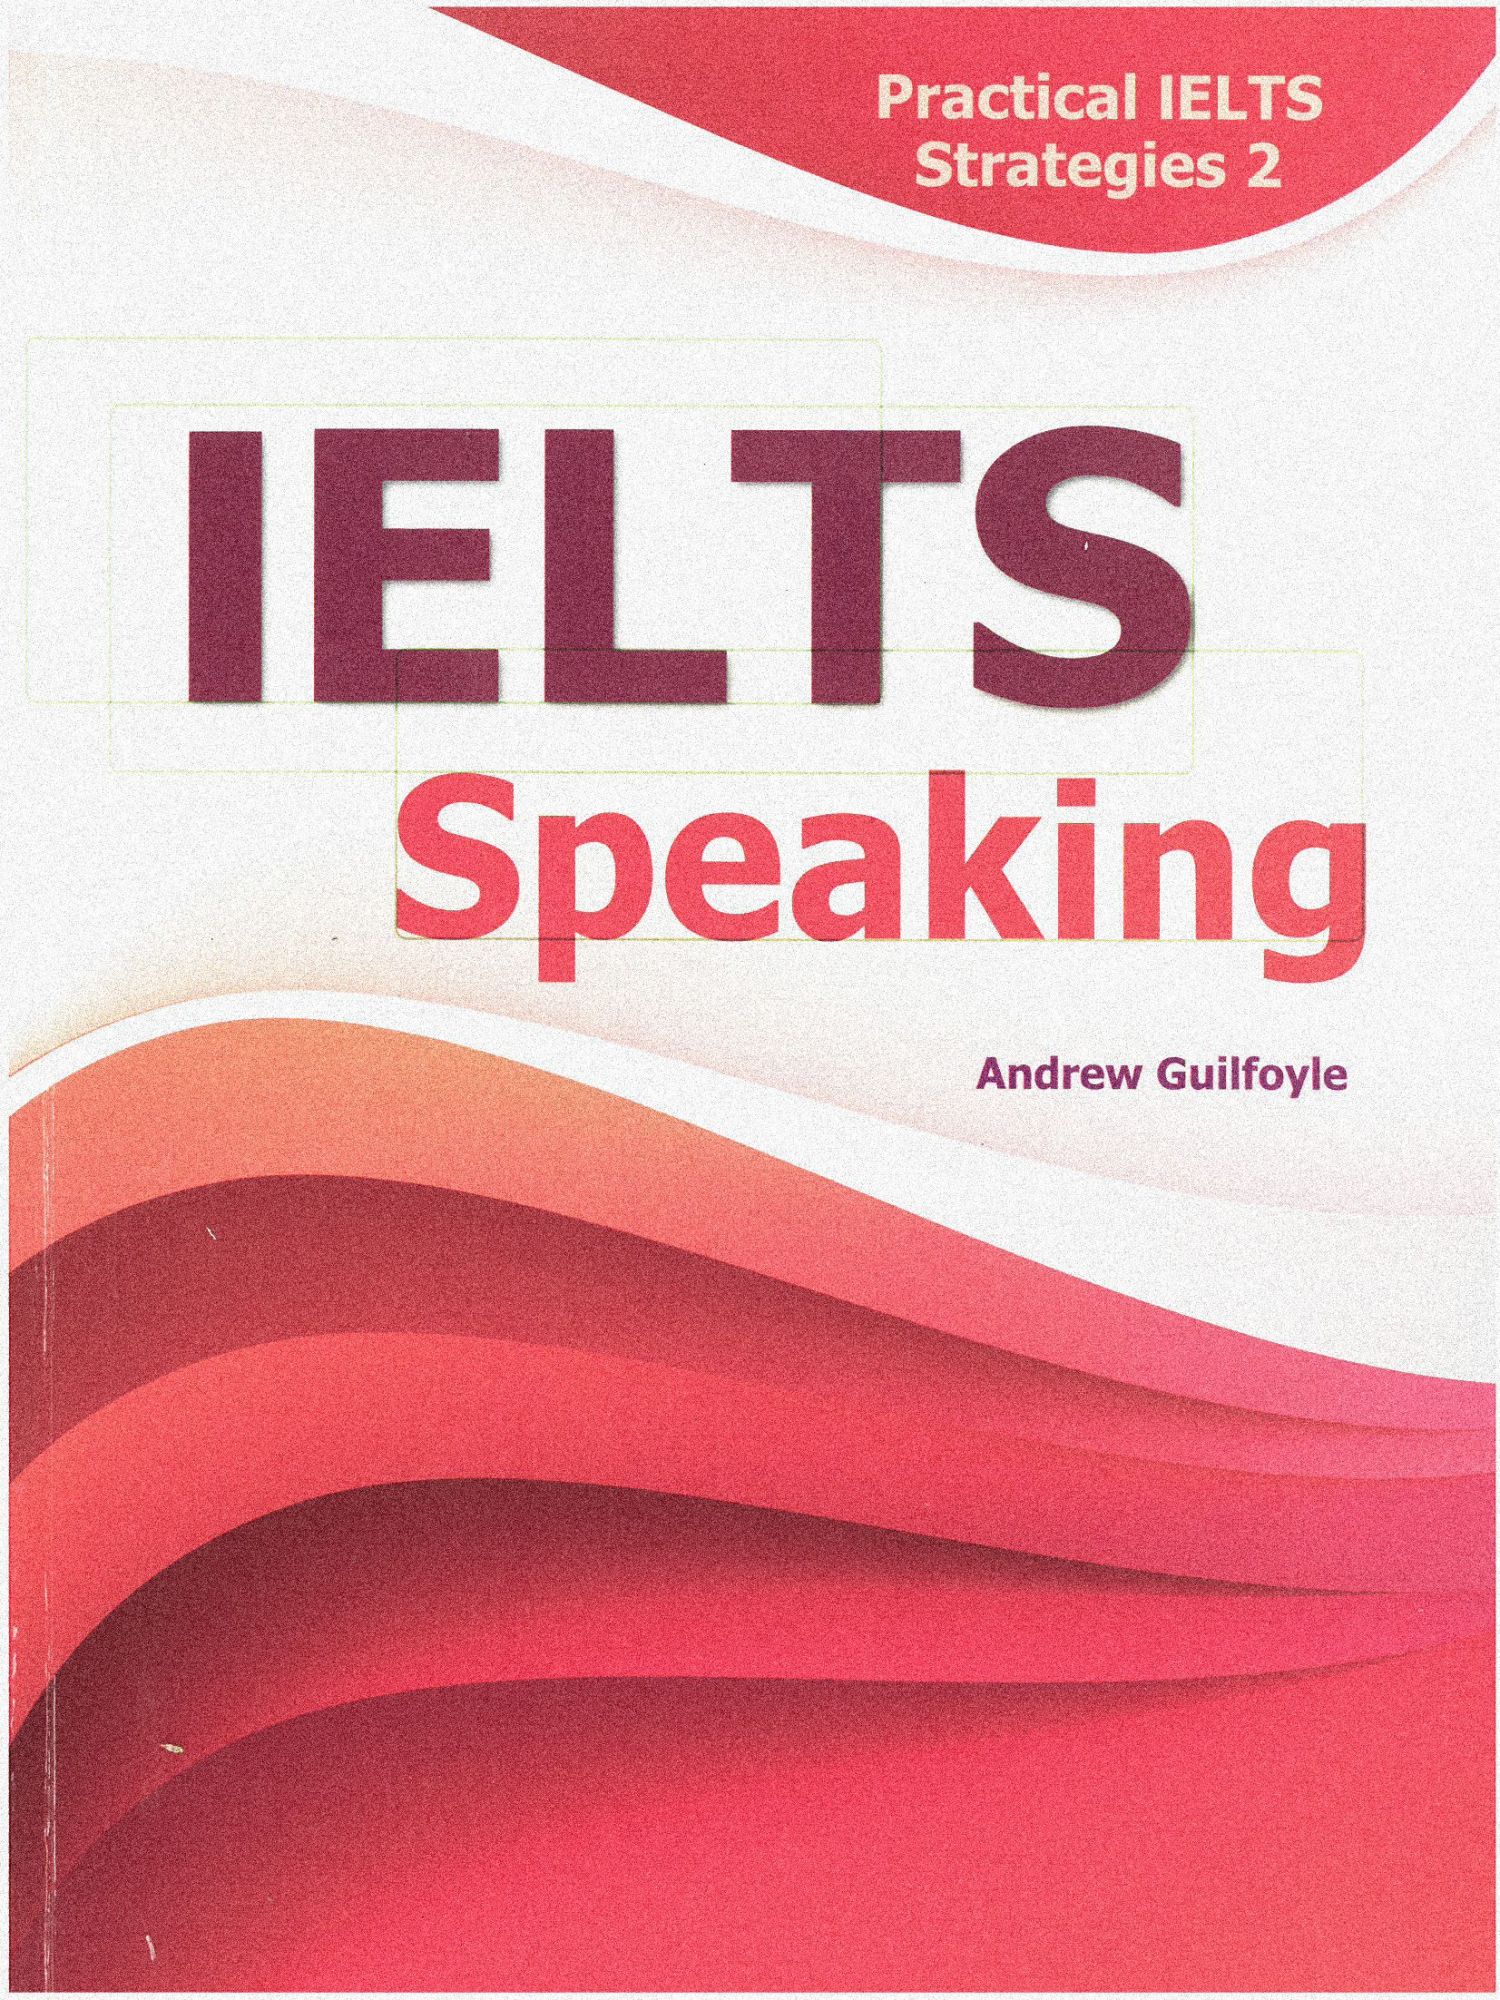 Practical IELTS Strategies 2 - IELTS Speaking